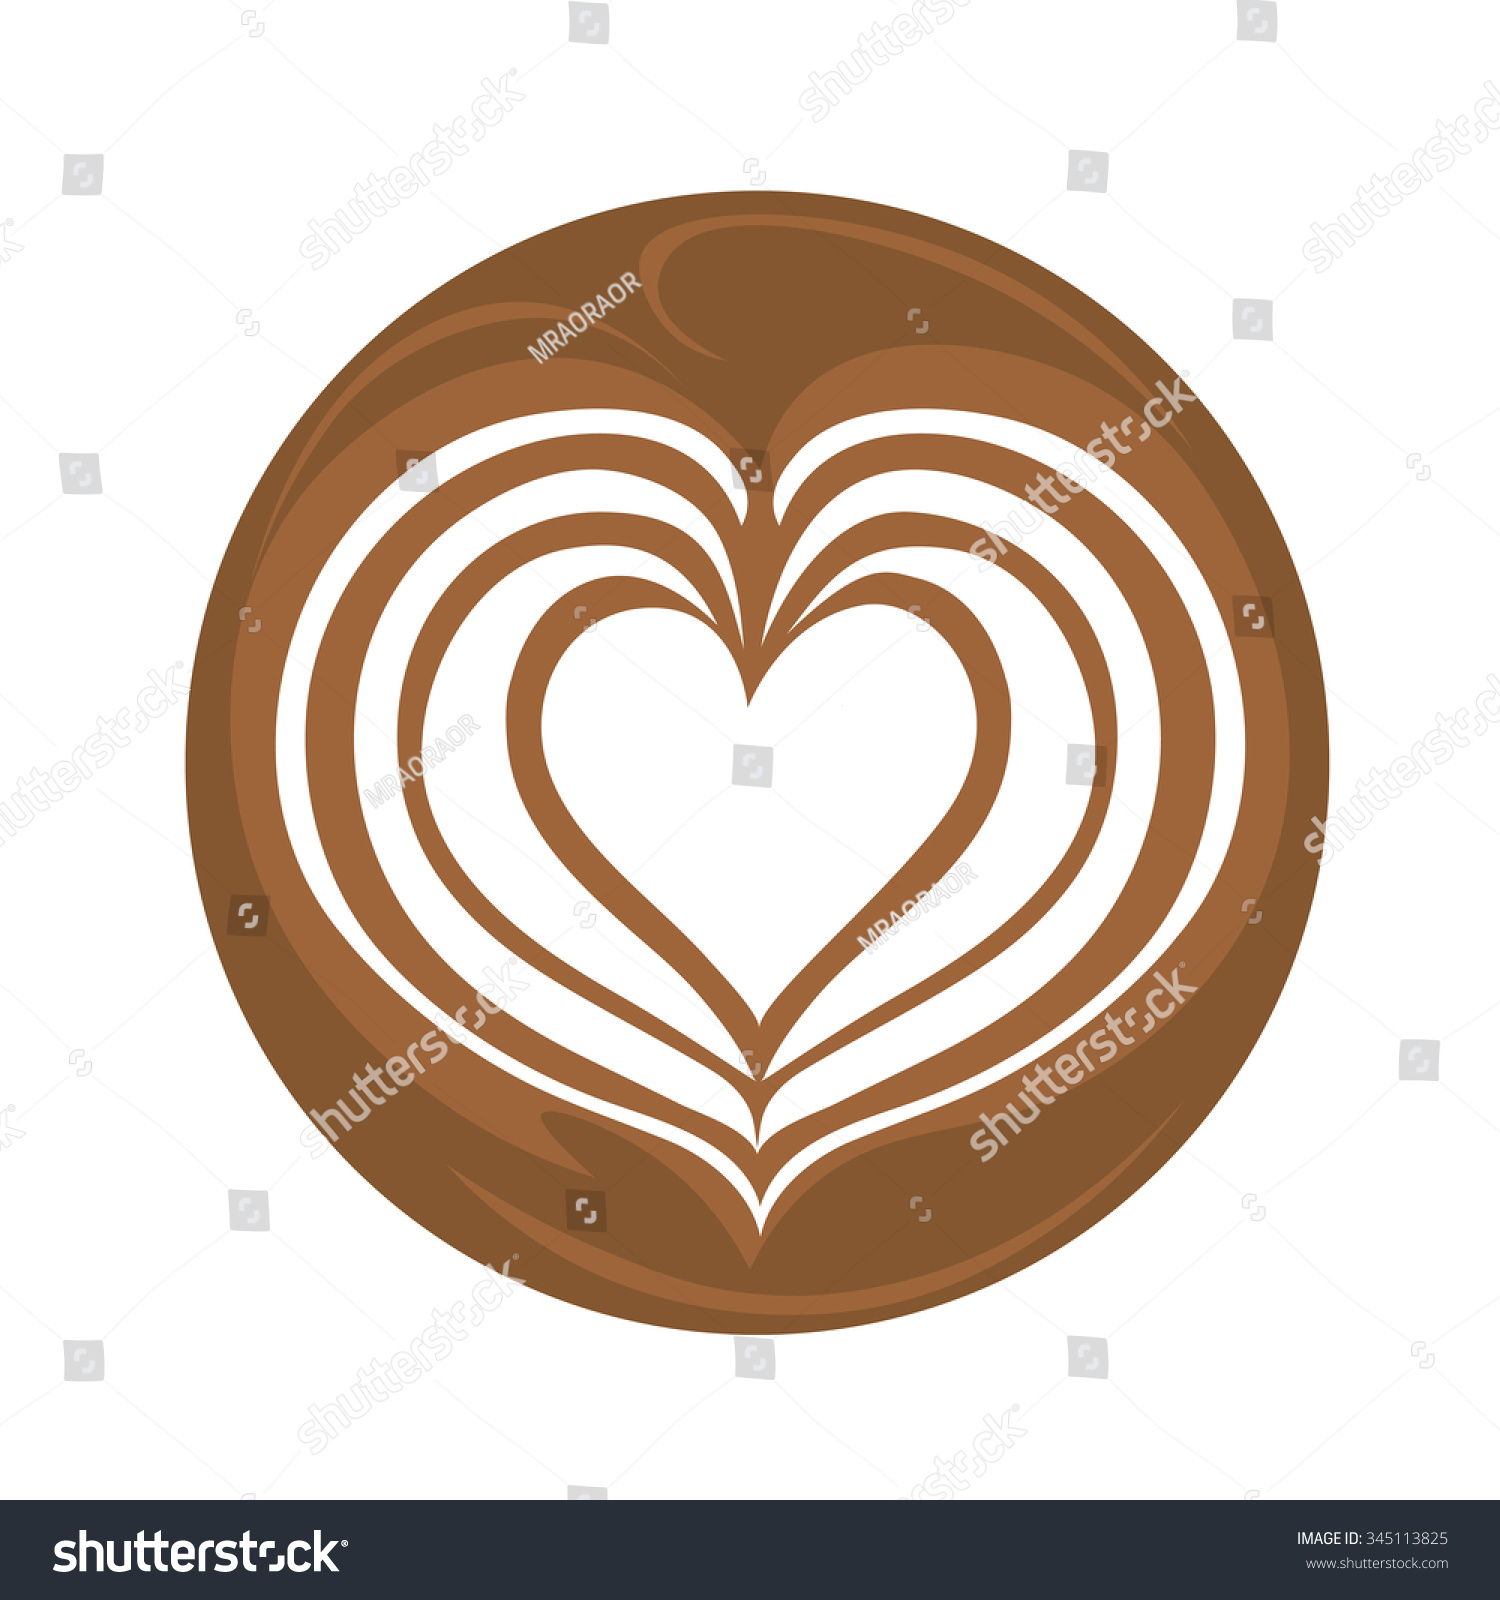 coffee heart clipart - photo #33